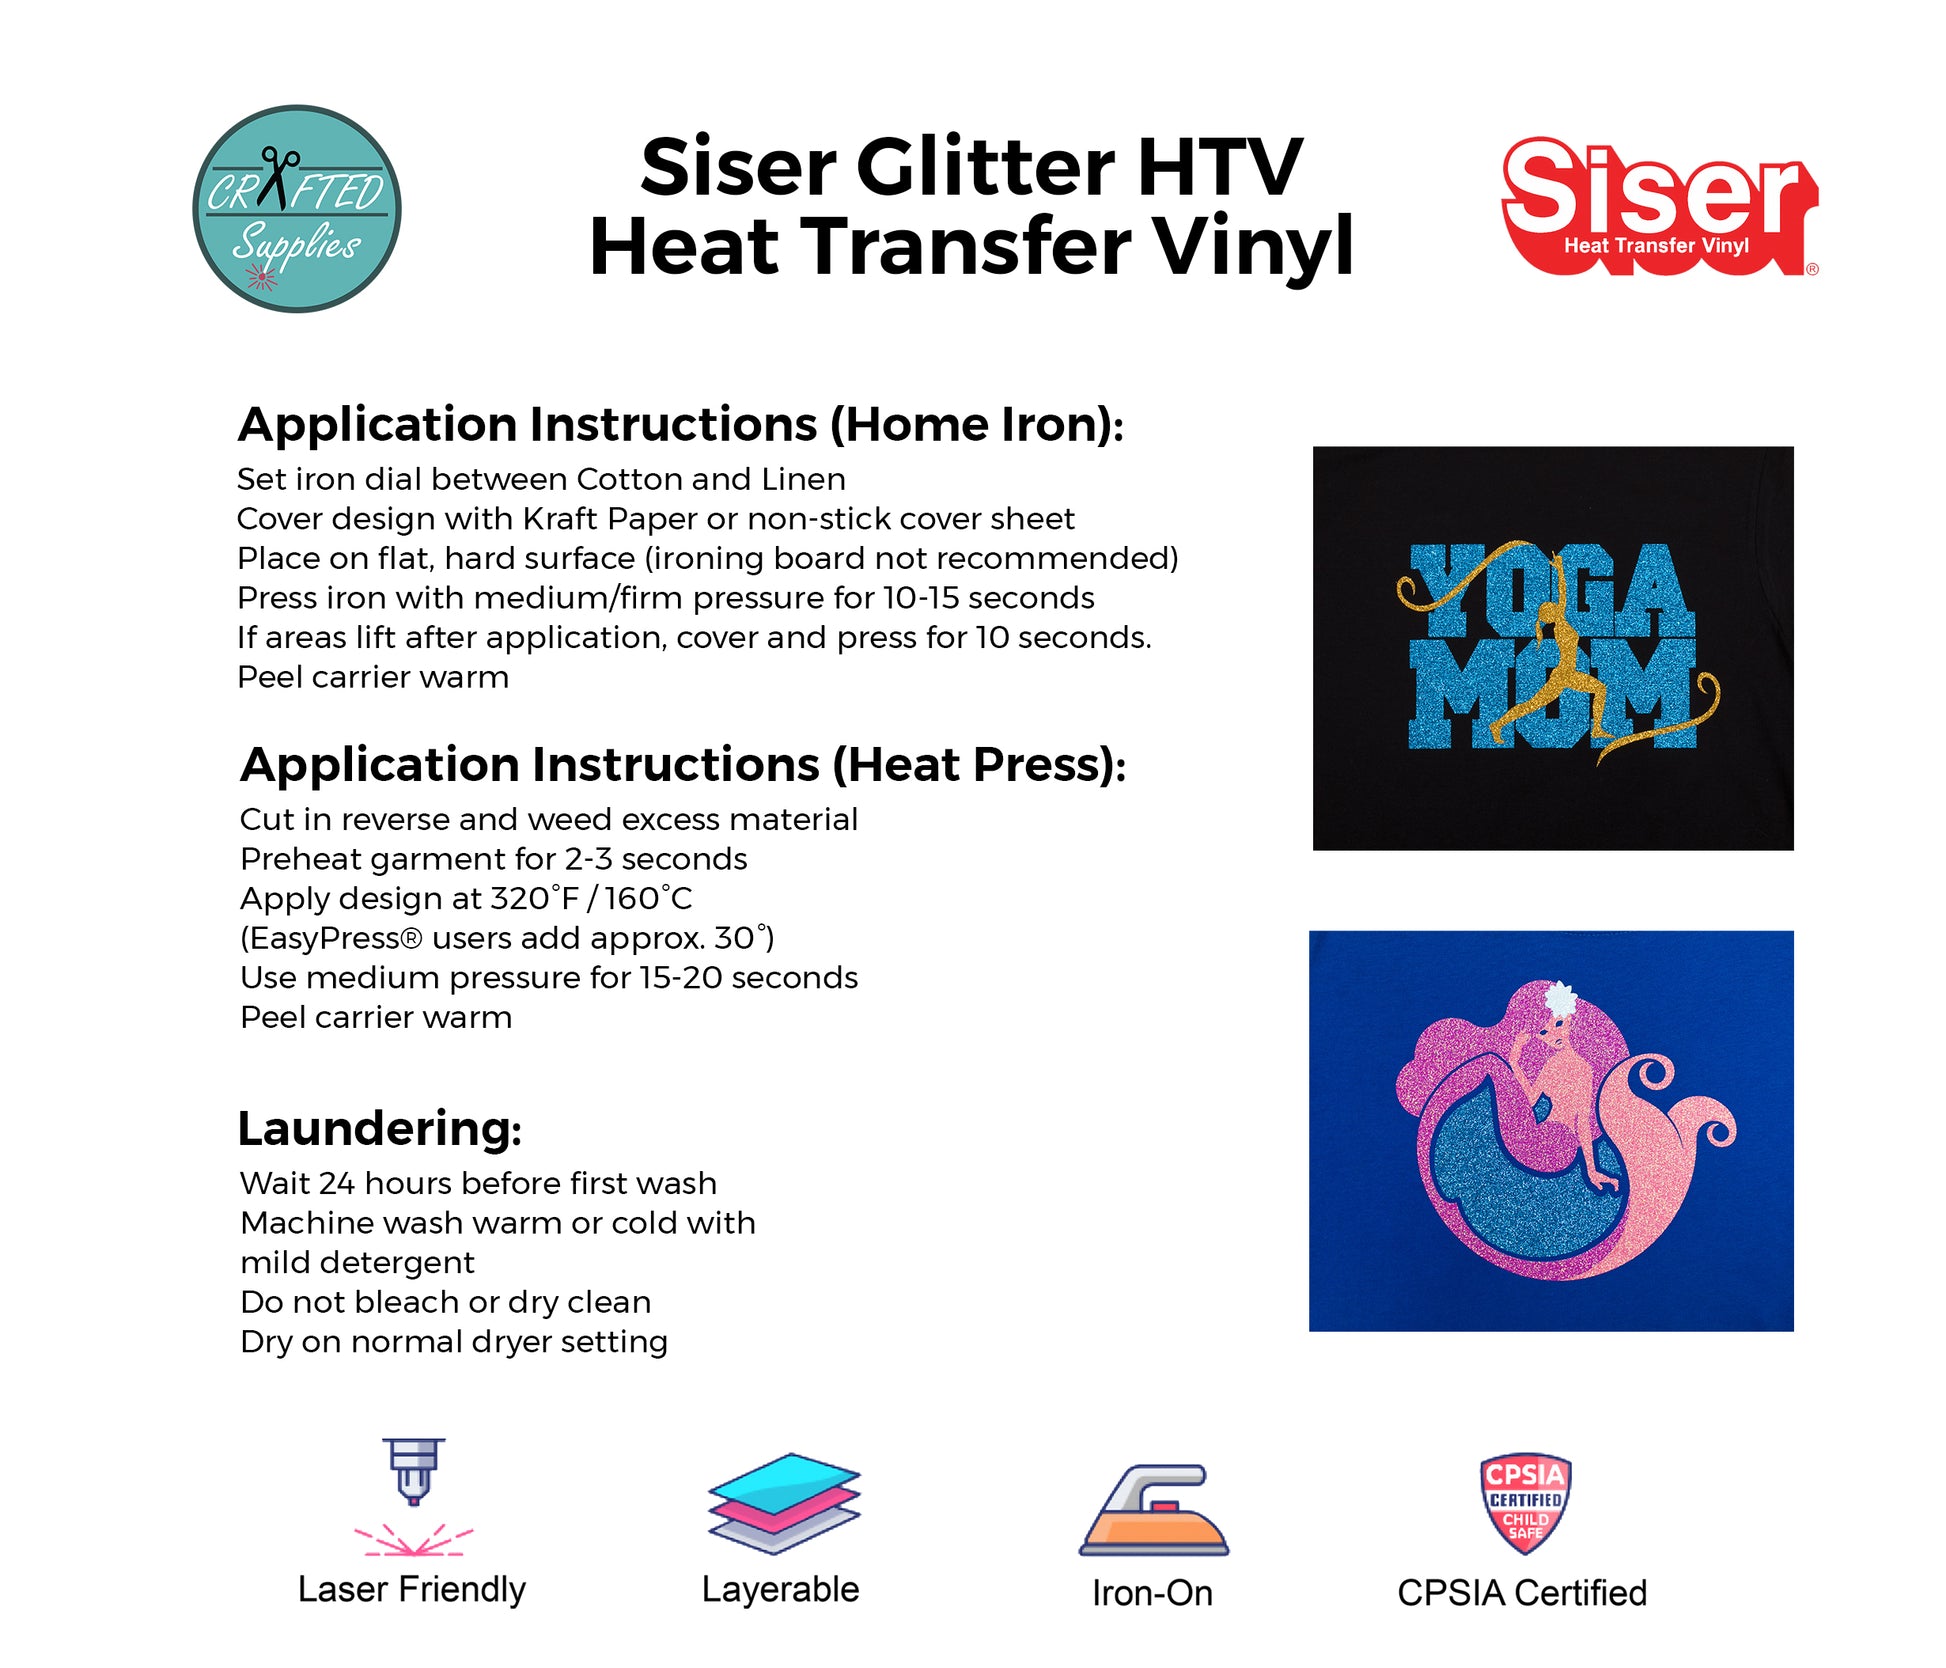 GLITTER Silver HTV 10 x 12 inches Sheet Heat Transfer Vinyl - My